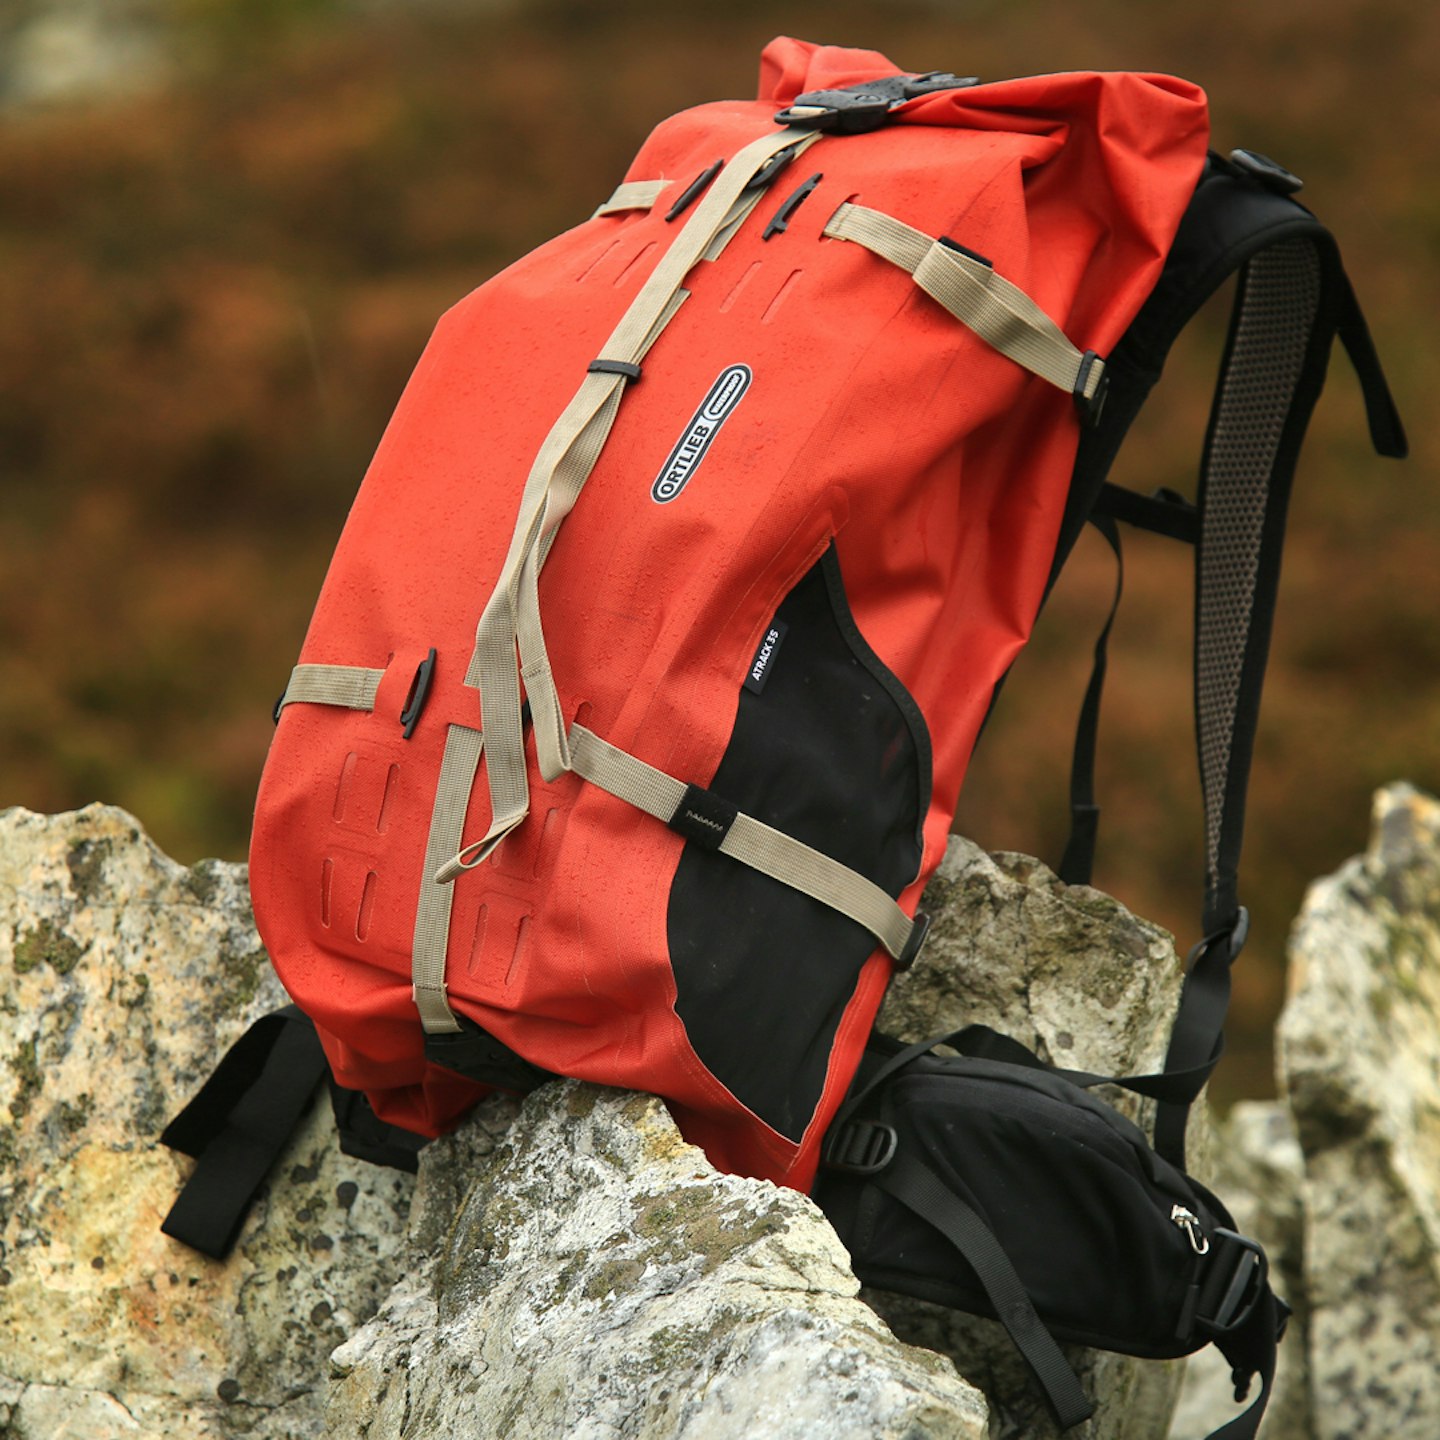 Ortlieb Atrak 35L waterproof backpack on a rock